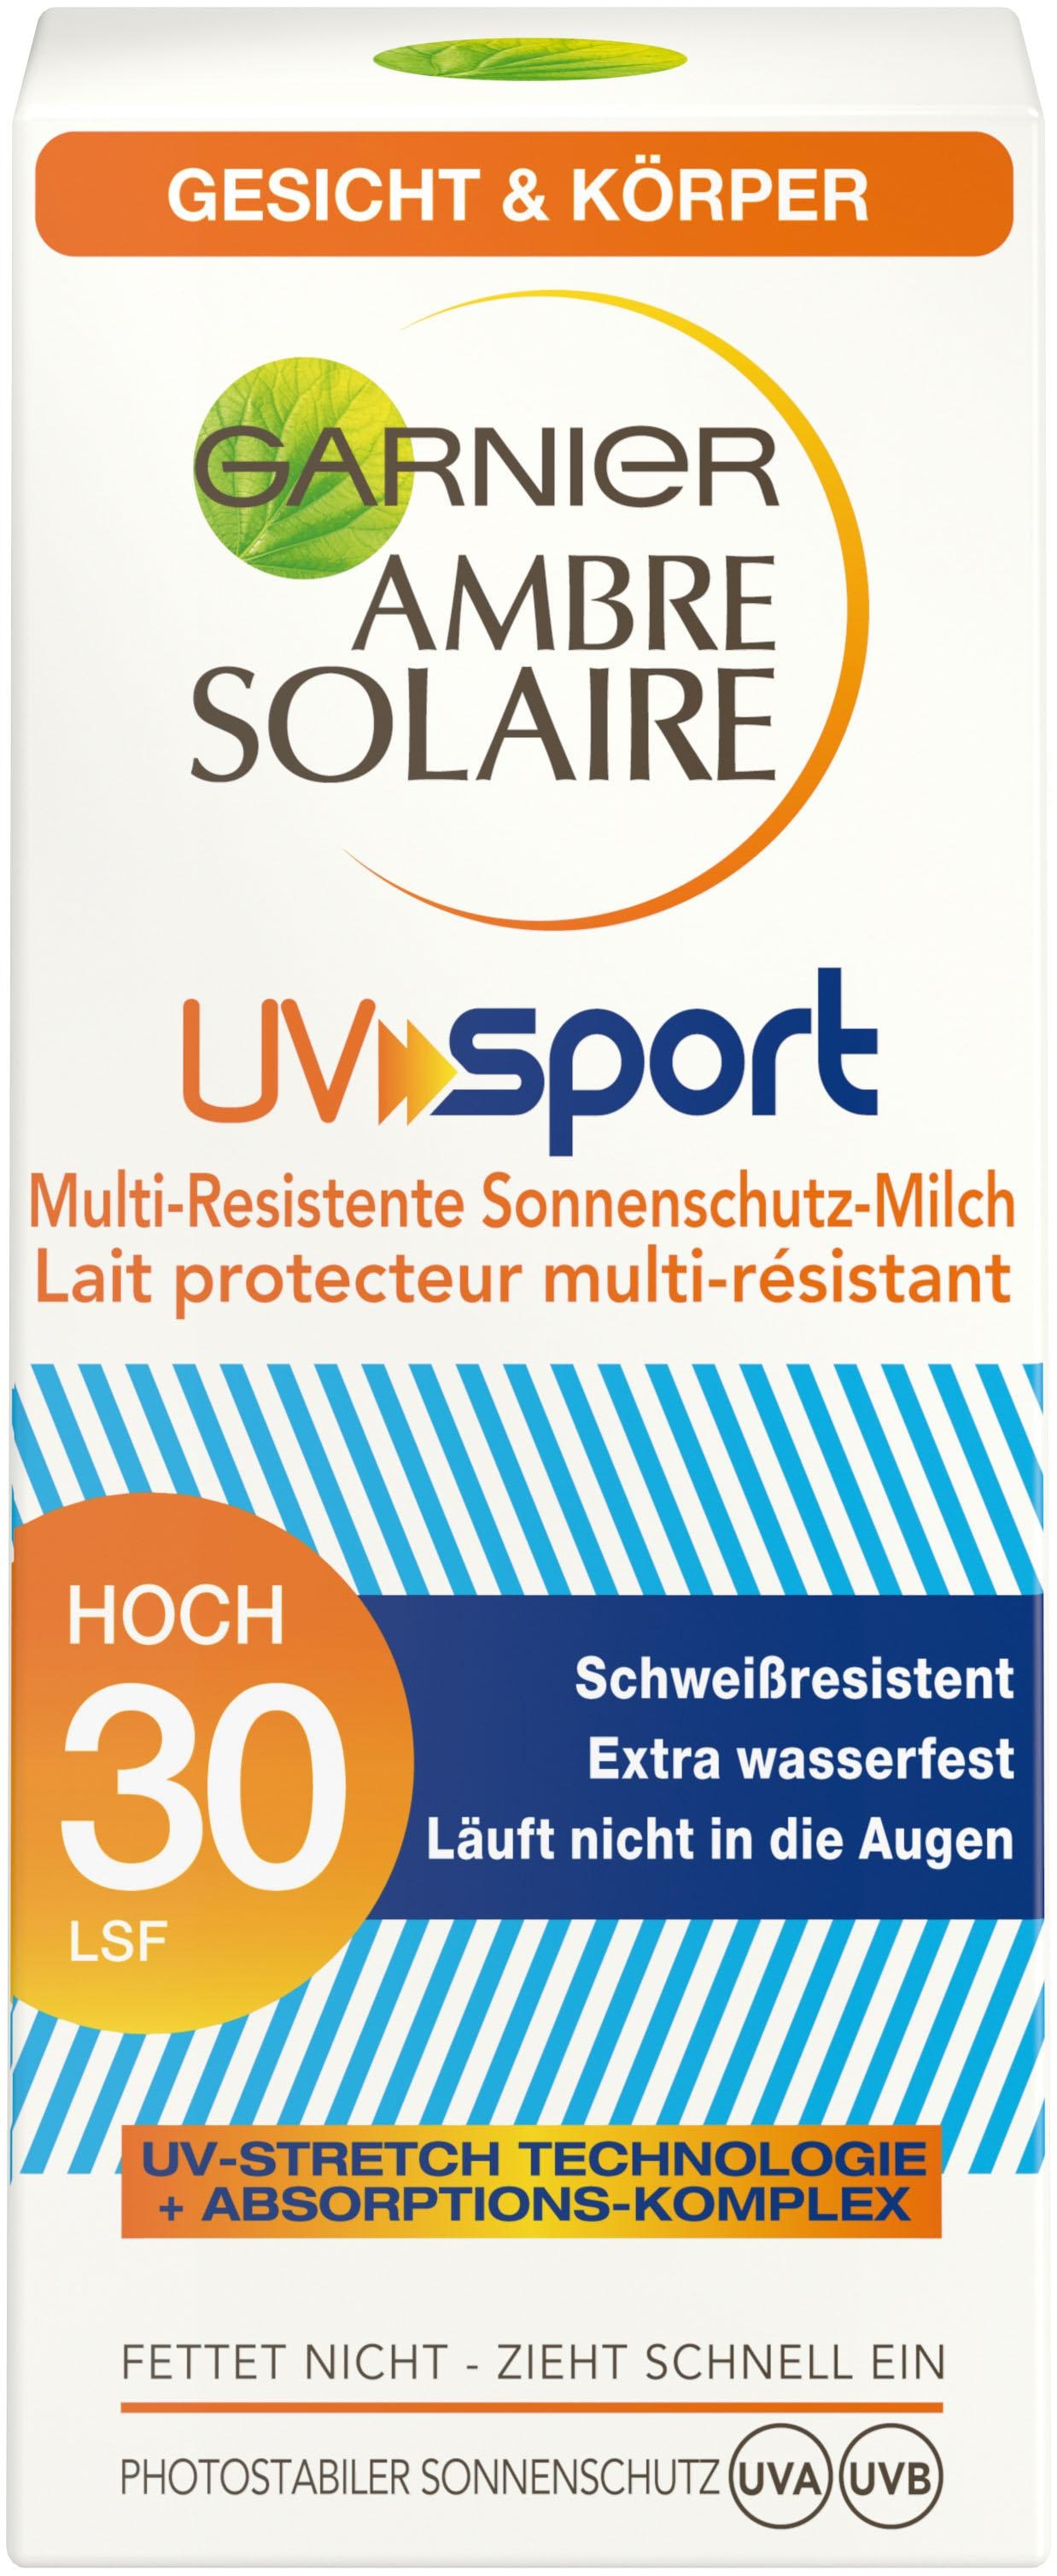 GARNIER Sonnenschutzmilch Solaire UV bei »Ambre Sport 30« LSF Protection